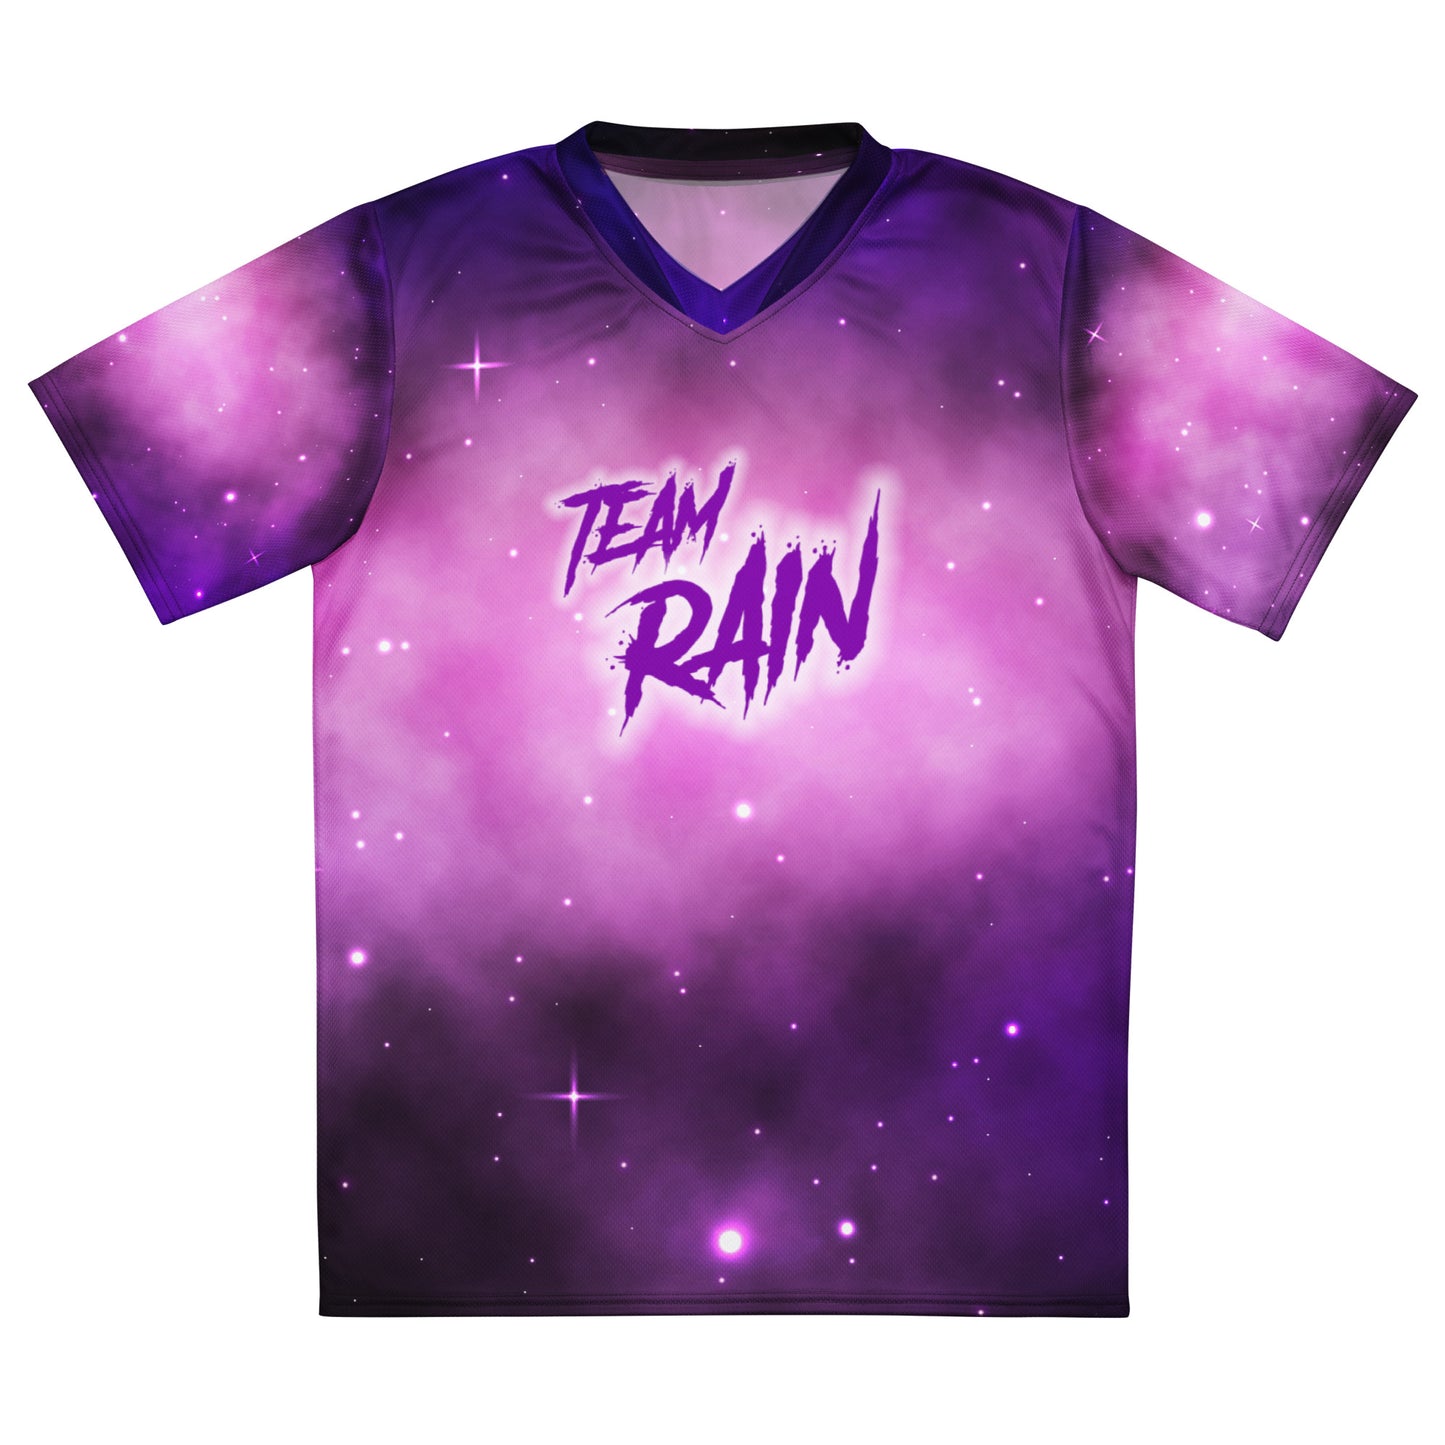 TEAM RAIN 2 Recycled unisex sports jersey